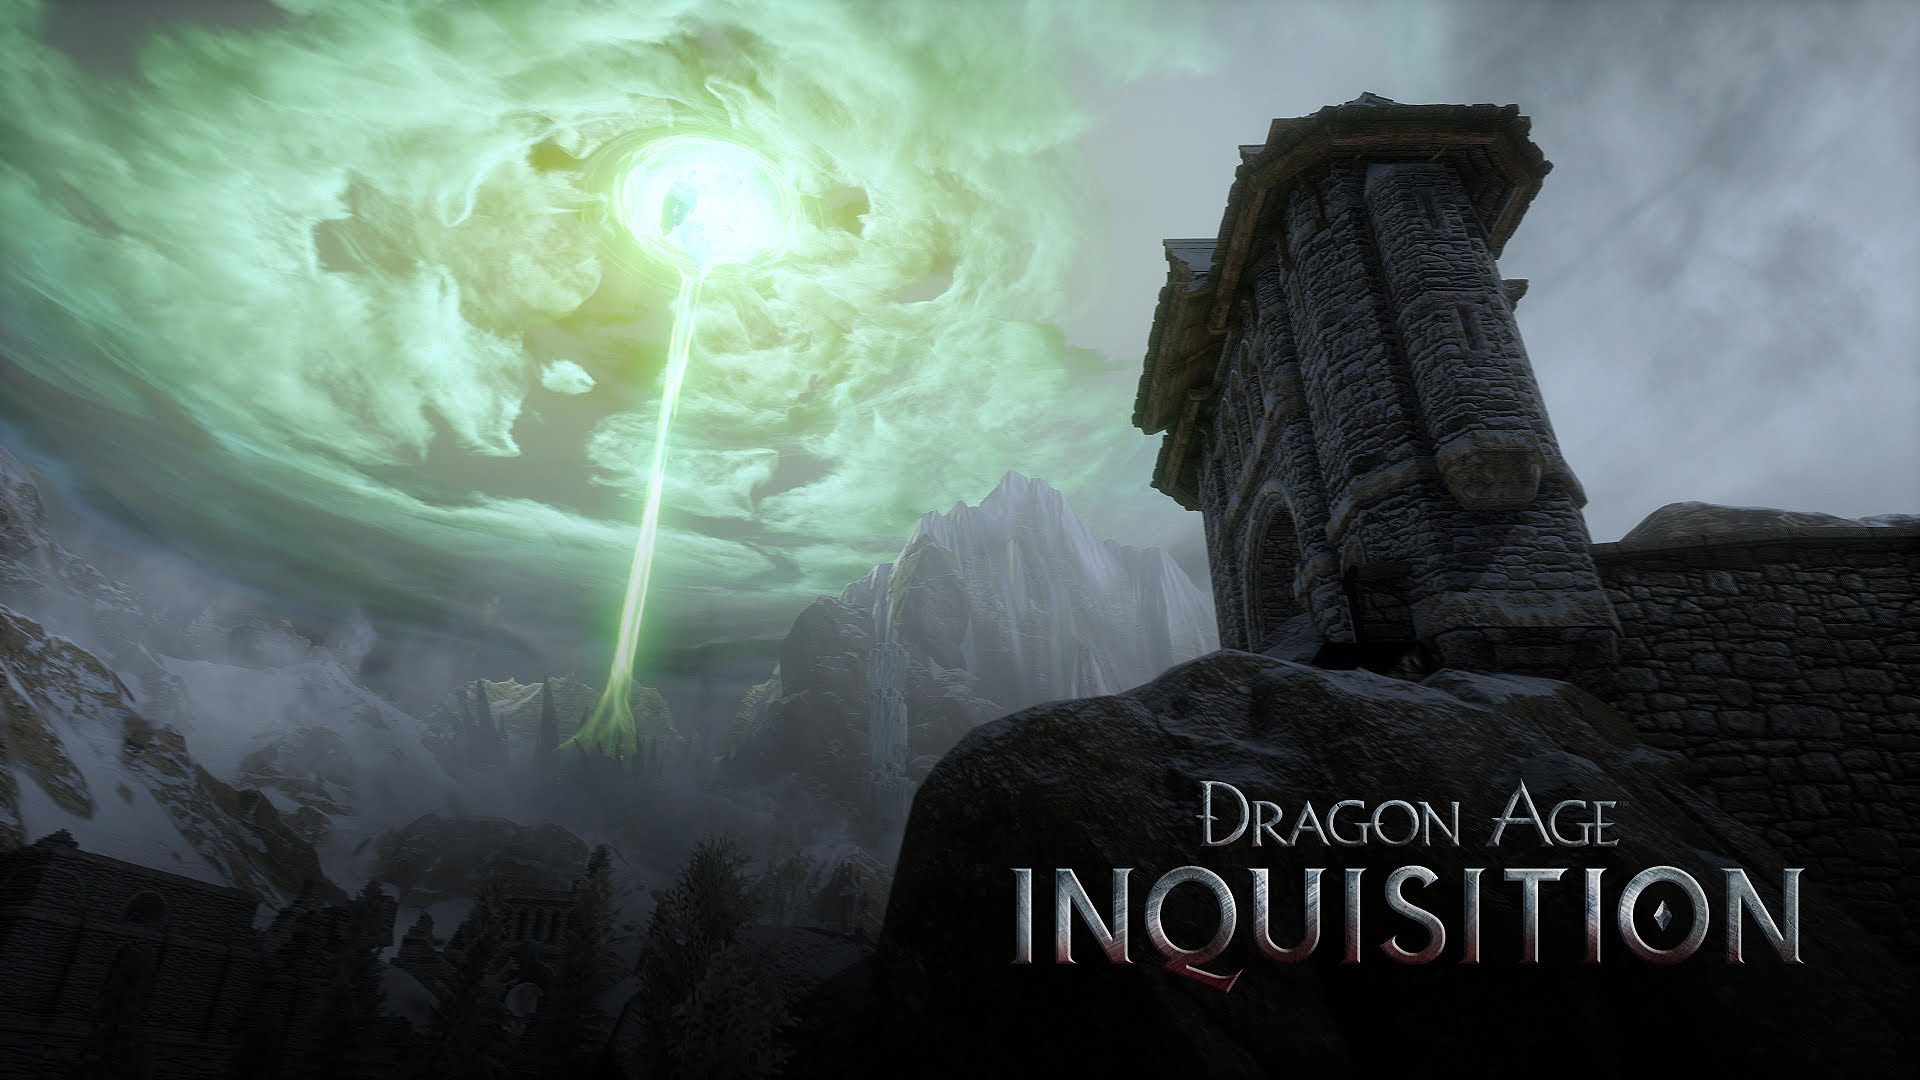 Dragon Age Inquisition Iphone Wallpaper Dragon age inq